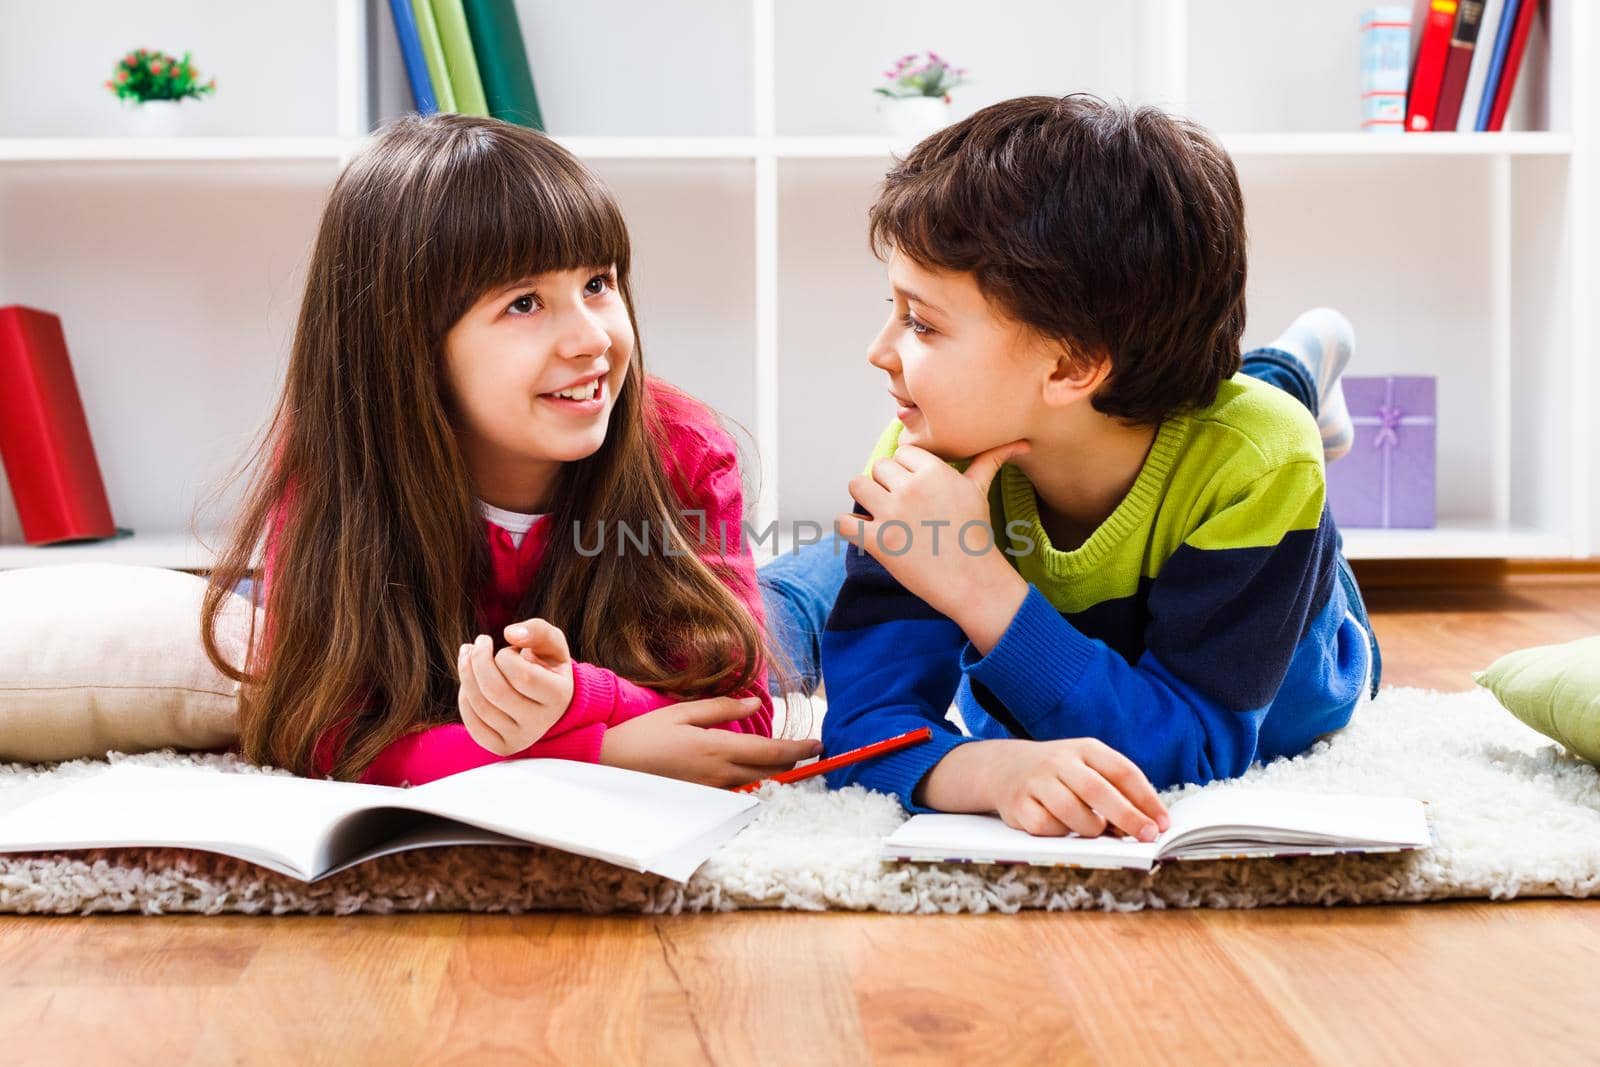 Image of children doing homework and talking.